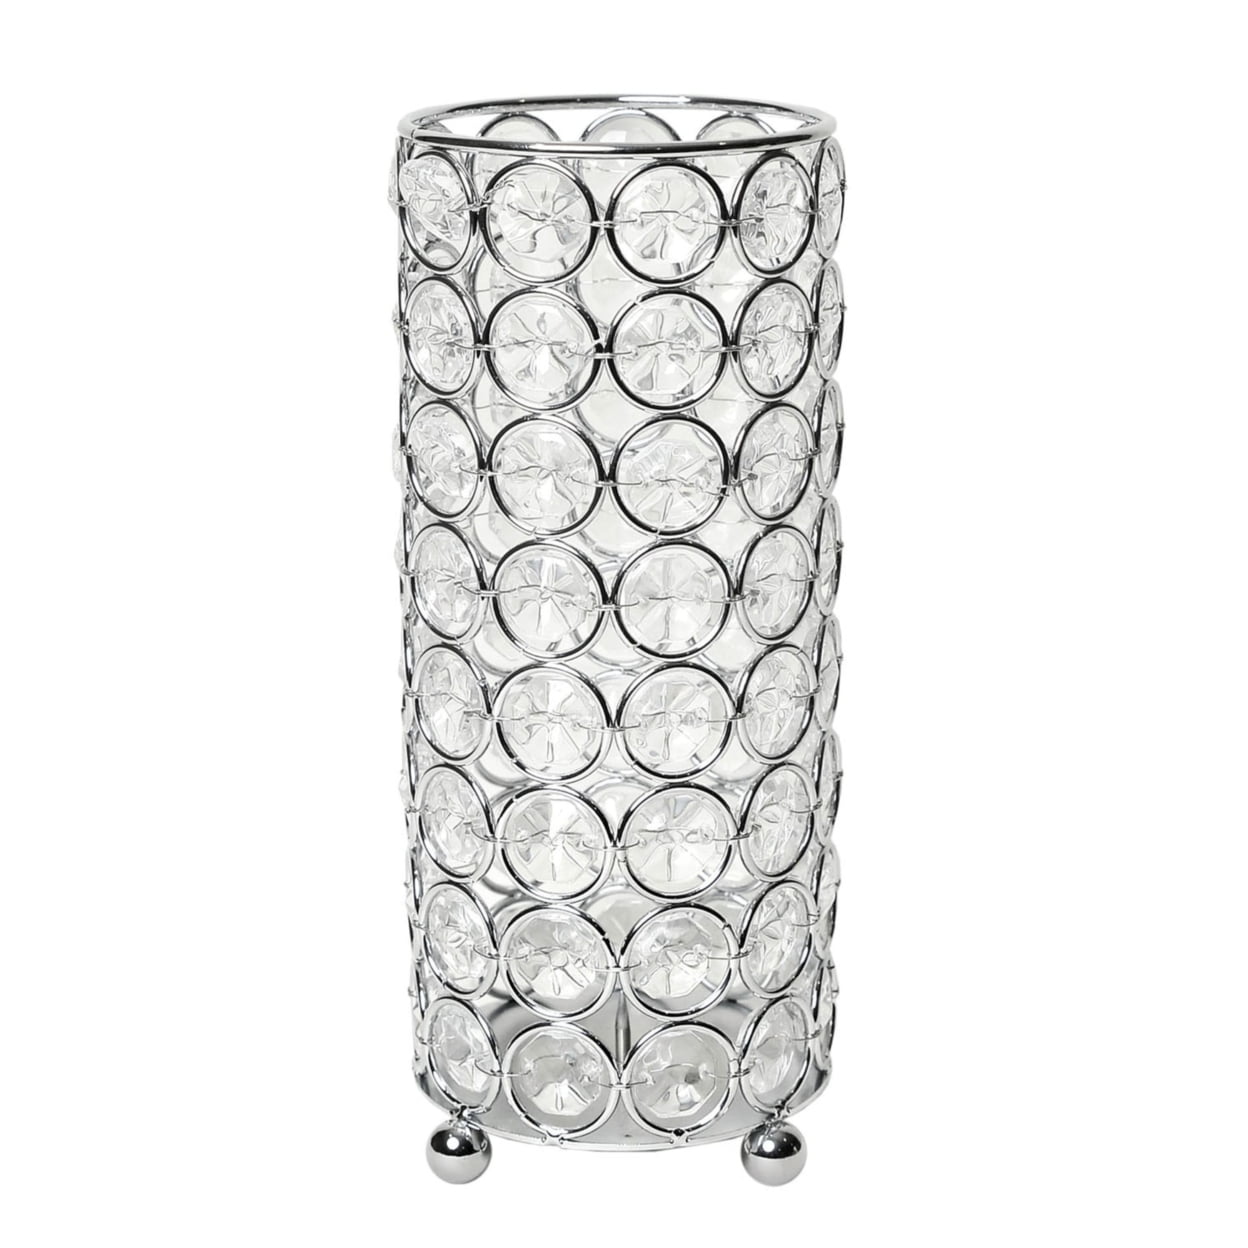 Elegant Designs Hg1003-chr 7.75 In. Elipse Crystal Decorative Flower Vase, Candle Holder, Wedding Centerpiece - Chrome